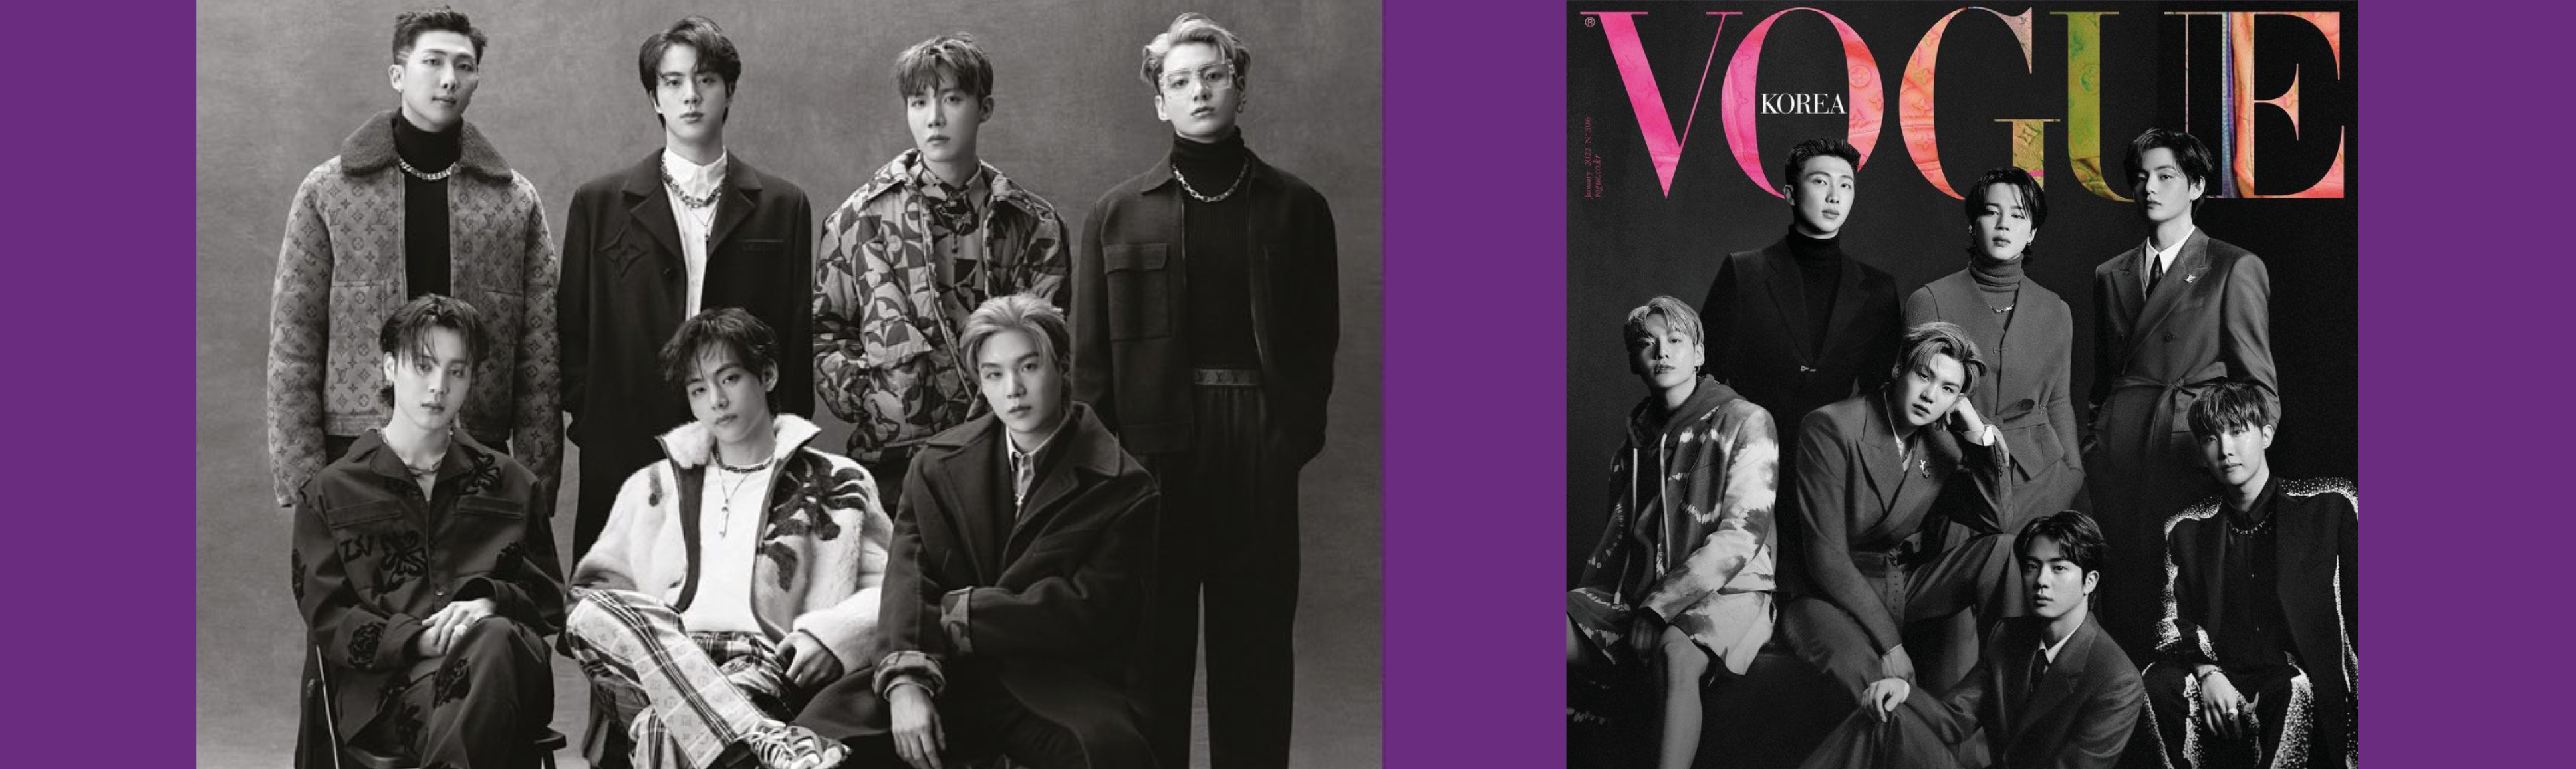 Vogue & GQ Korea present the global boy band BTS!